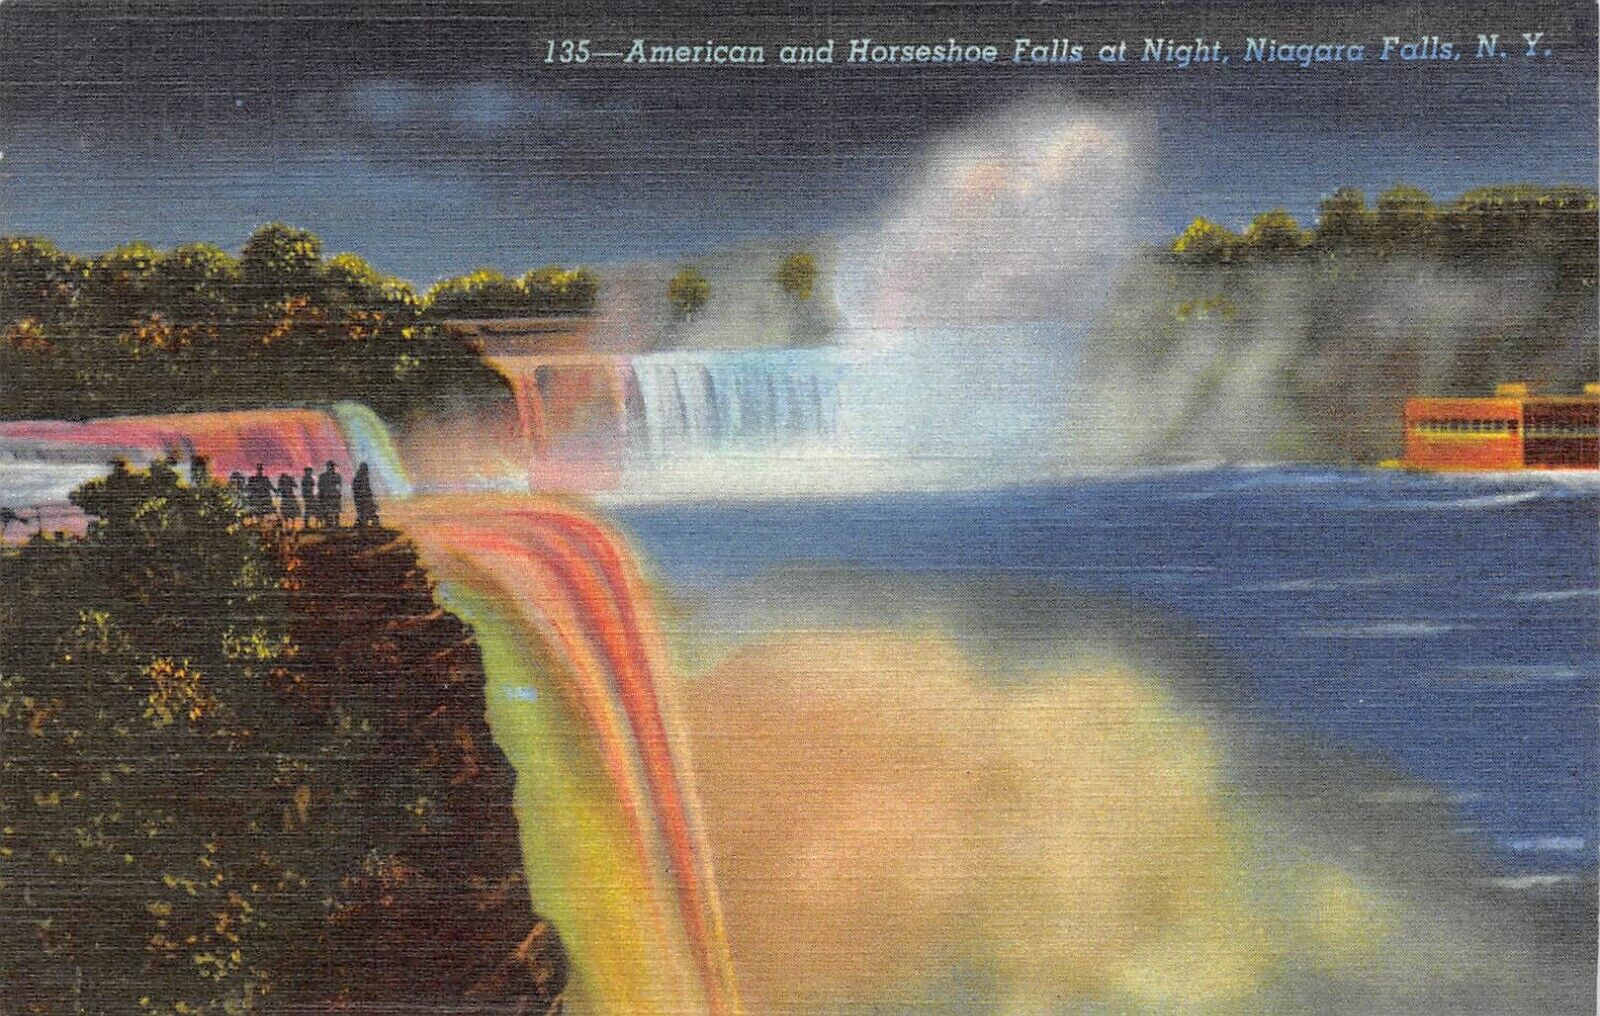 D2061 American & Horseshoe Falls at Night, Niagara Falls, NY 1950 Teich Linen PC